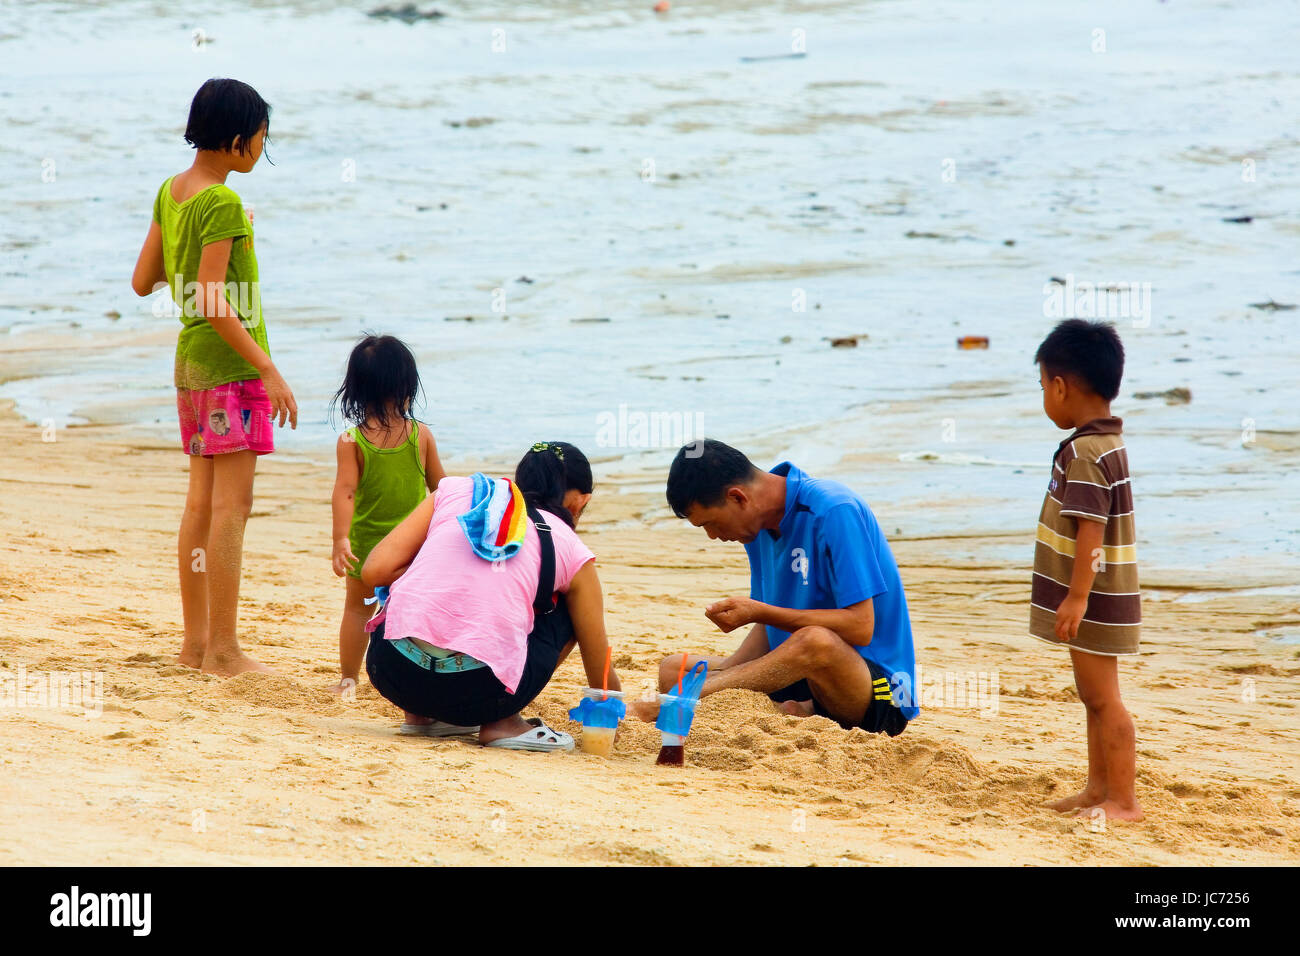 Image result for thai families pattaya beach photos